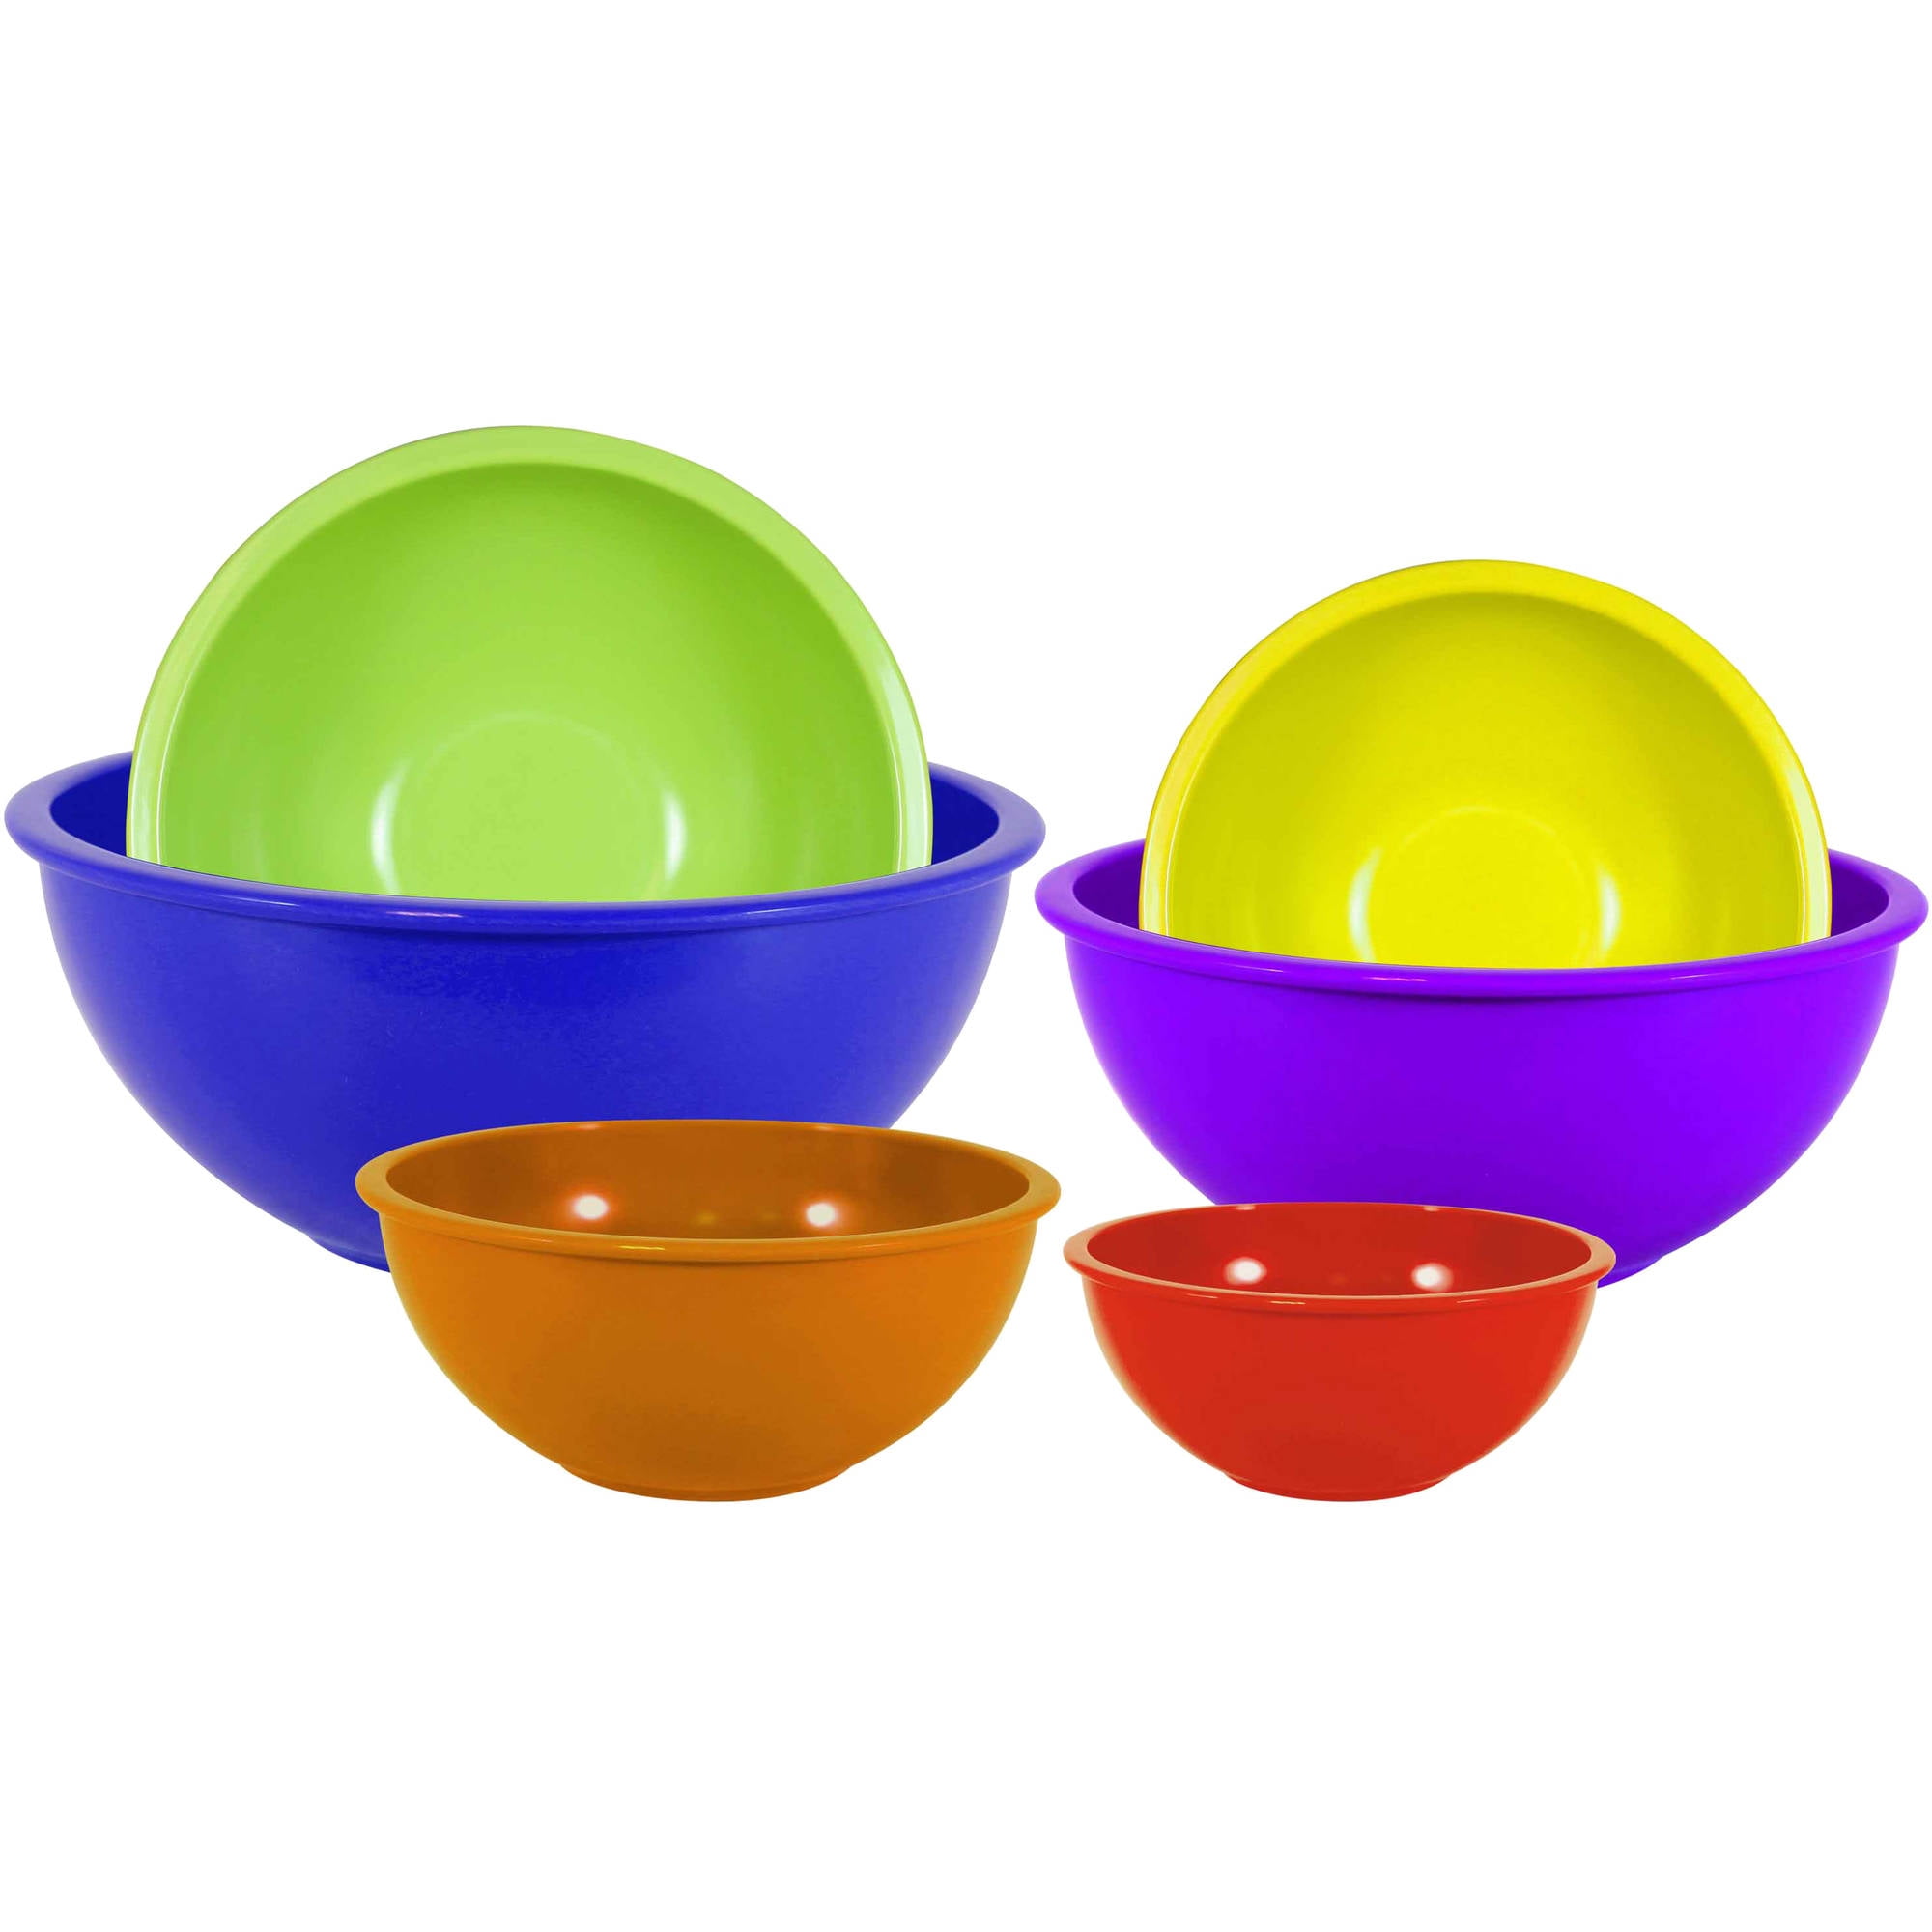 Orange Gourmet Home Products 6 Piece Nested Polypropylene Mixing Bowl Set